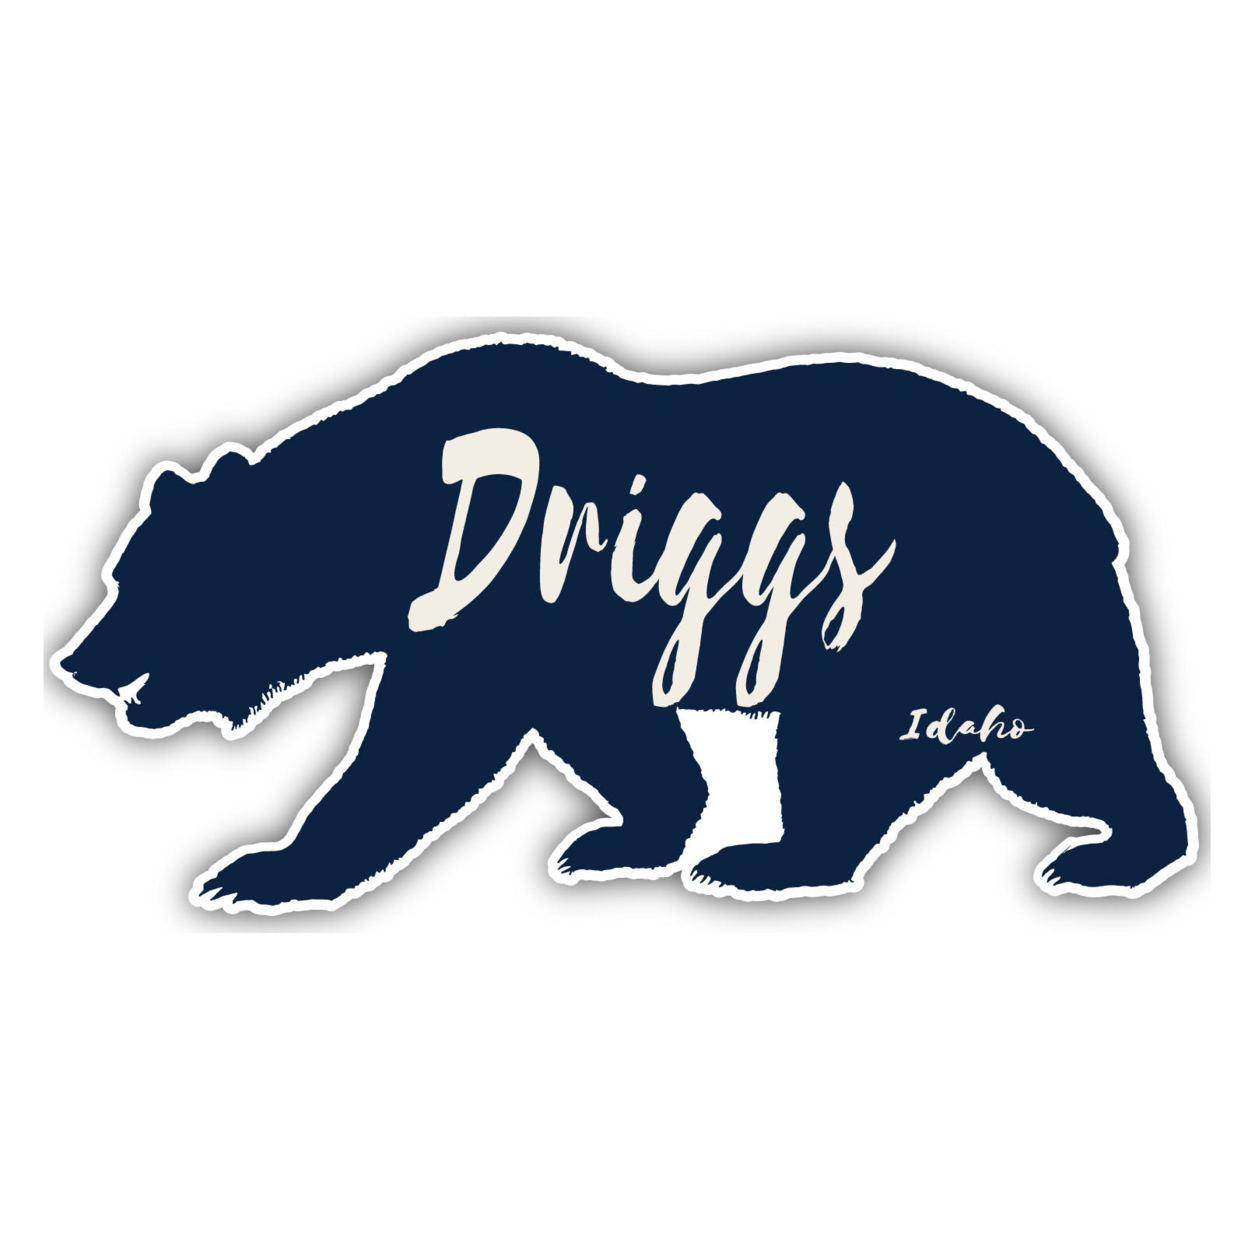 Driggs Idaho Souvenir Decorative Stickers (Choose Theme And Size) - Single Unit, 4-Inch, Tent